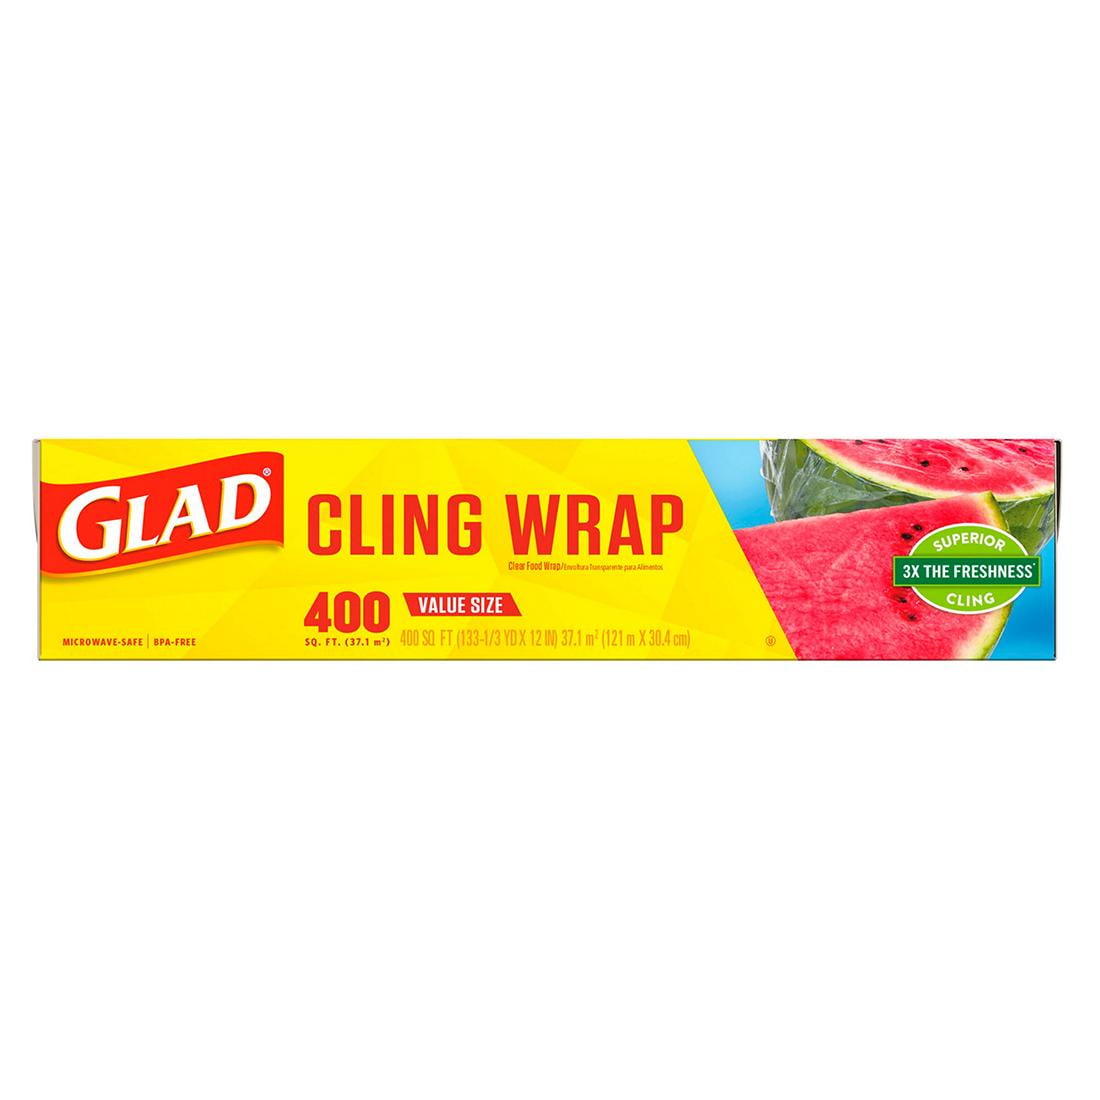 Glad Cling ‘N Seal Clear Plastic Food Wrap (400 sq. ft./roll, 2 rolls)